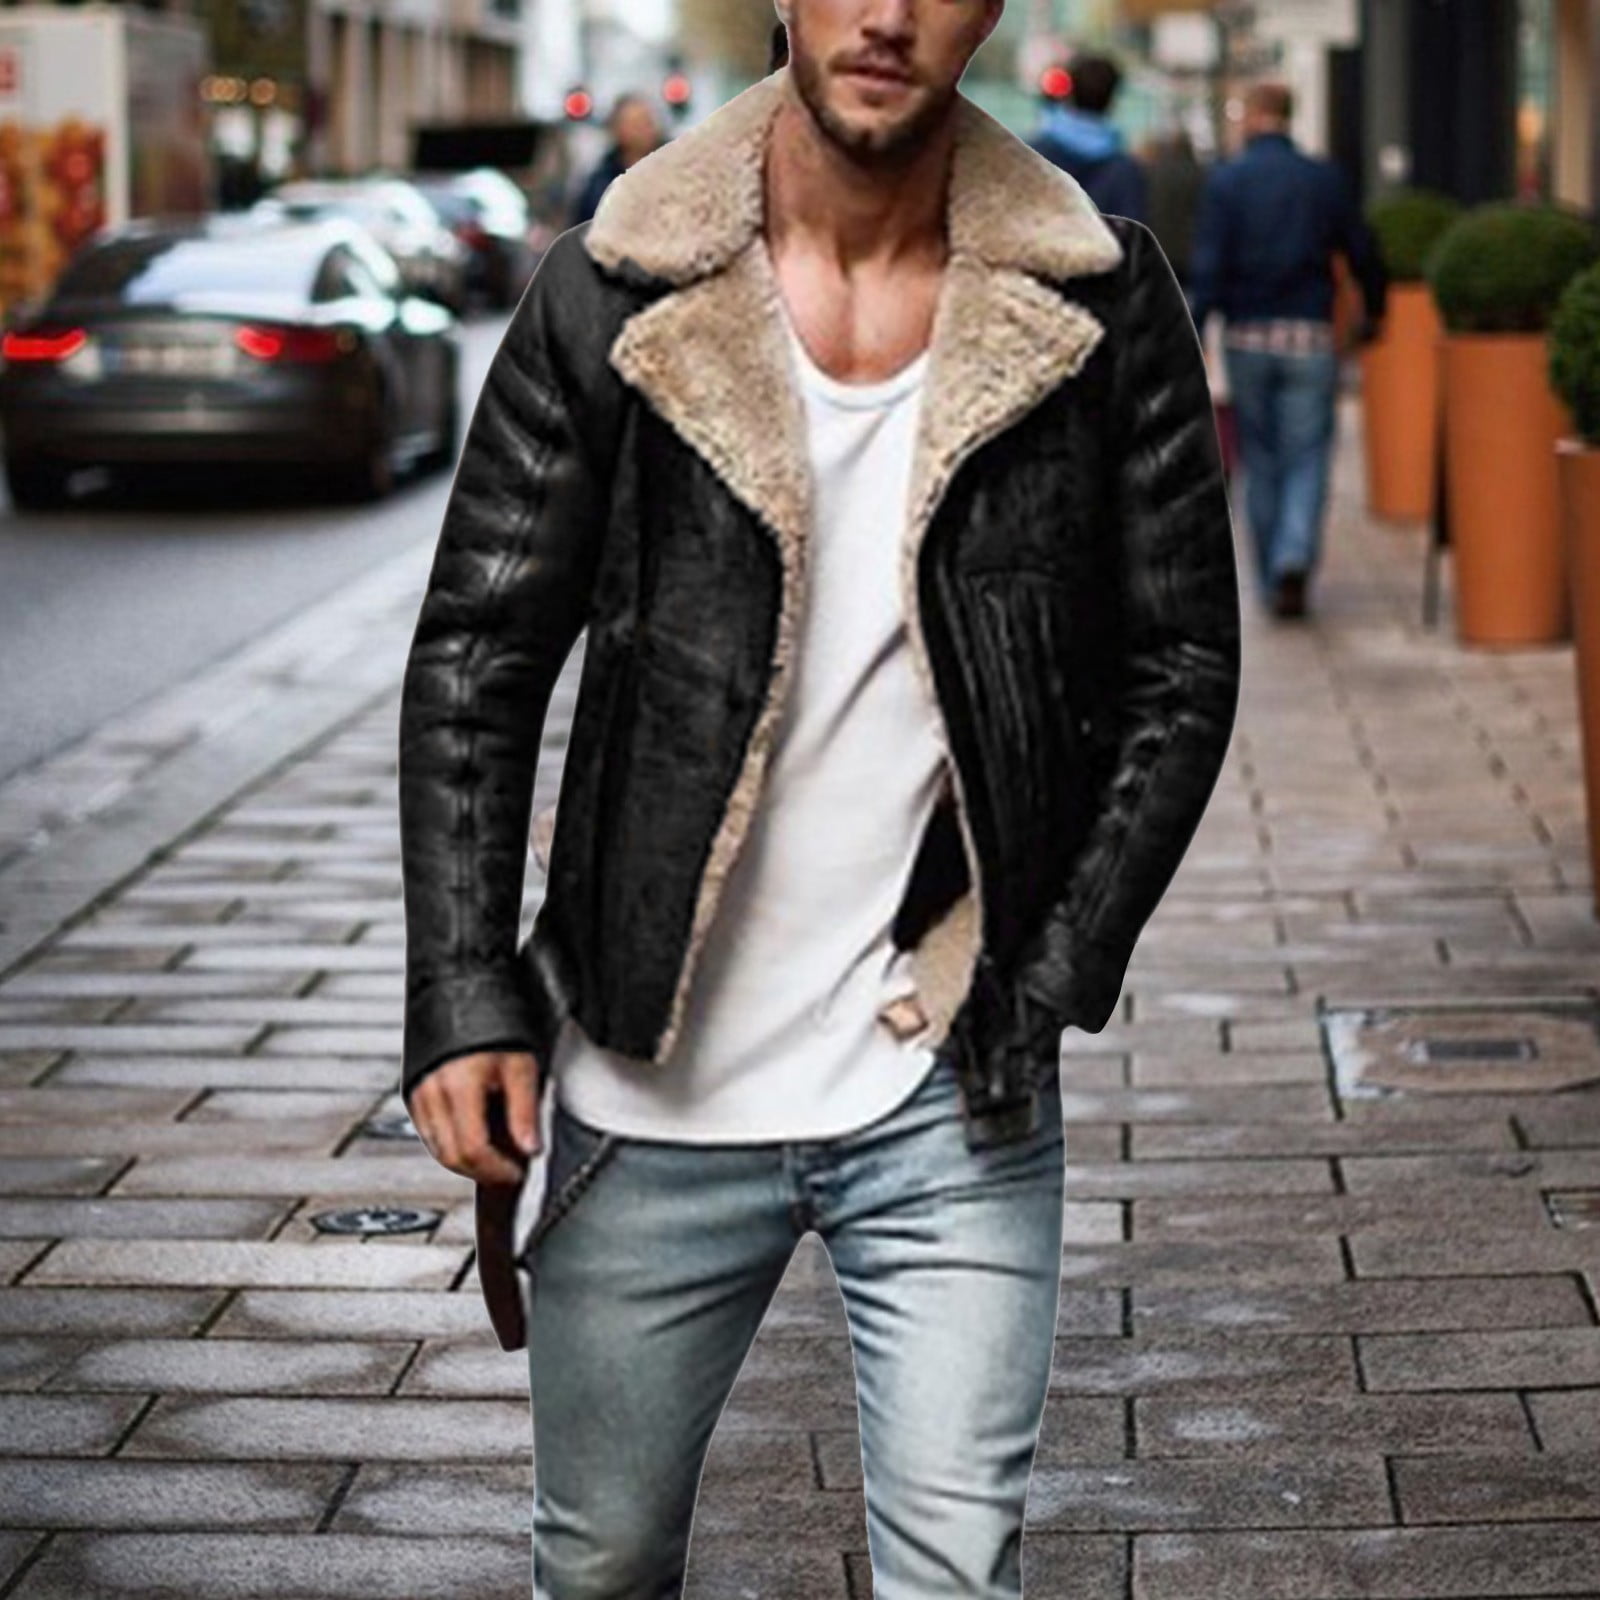 Mens Warm Plus velvet Leather Jacket Winter Thicken Coat Overcoat Casual Outwear 